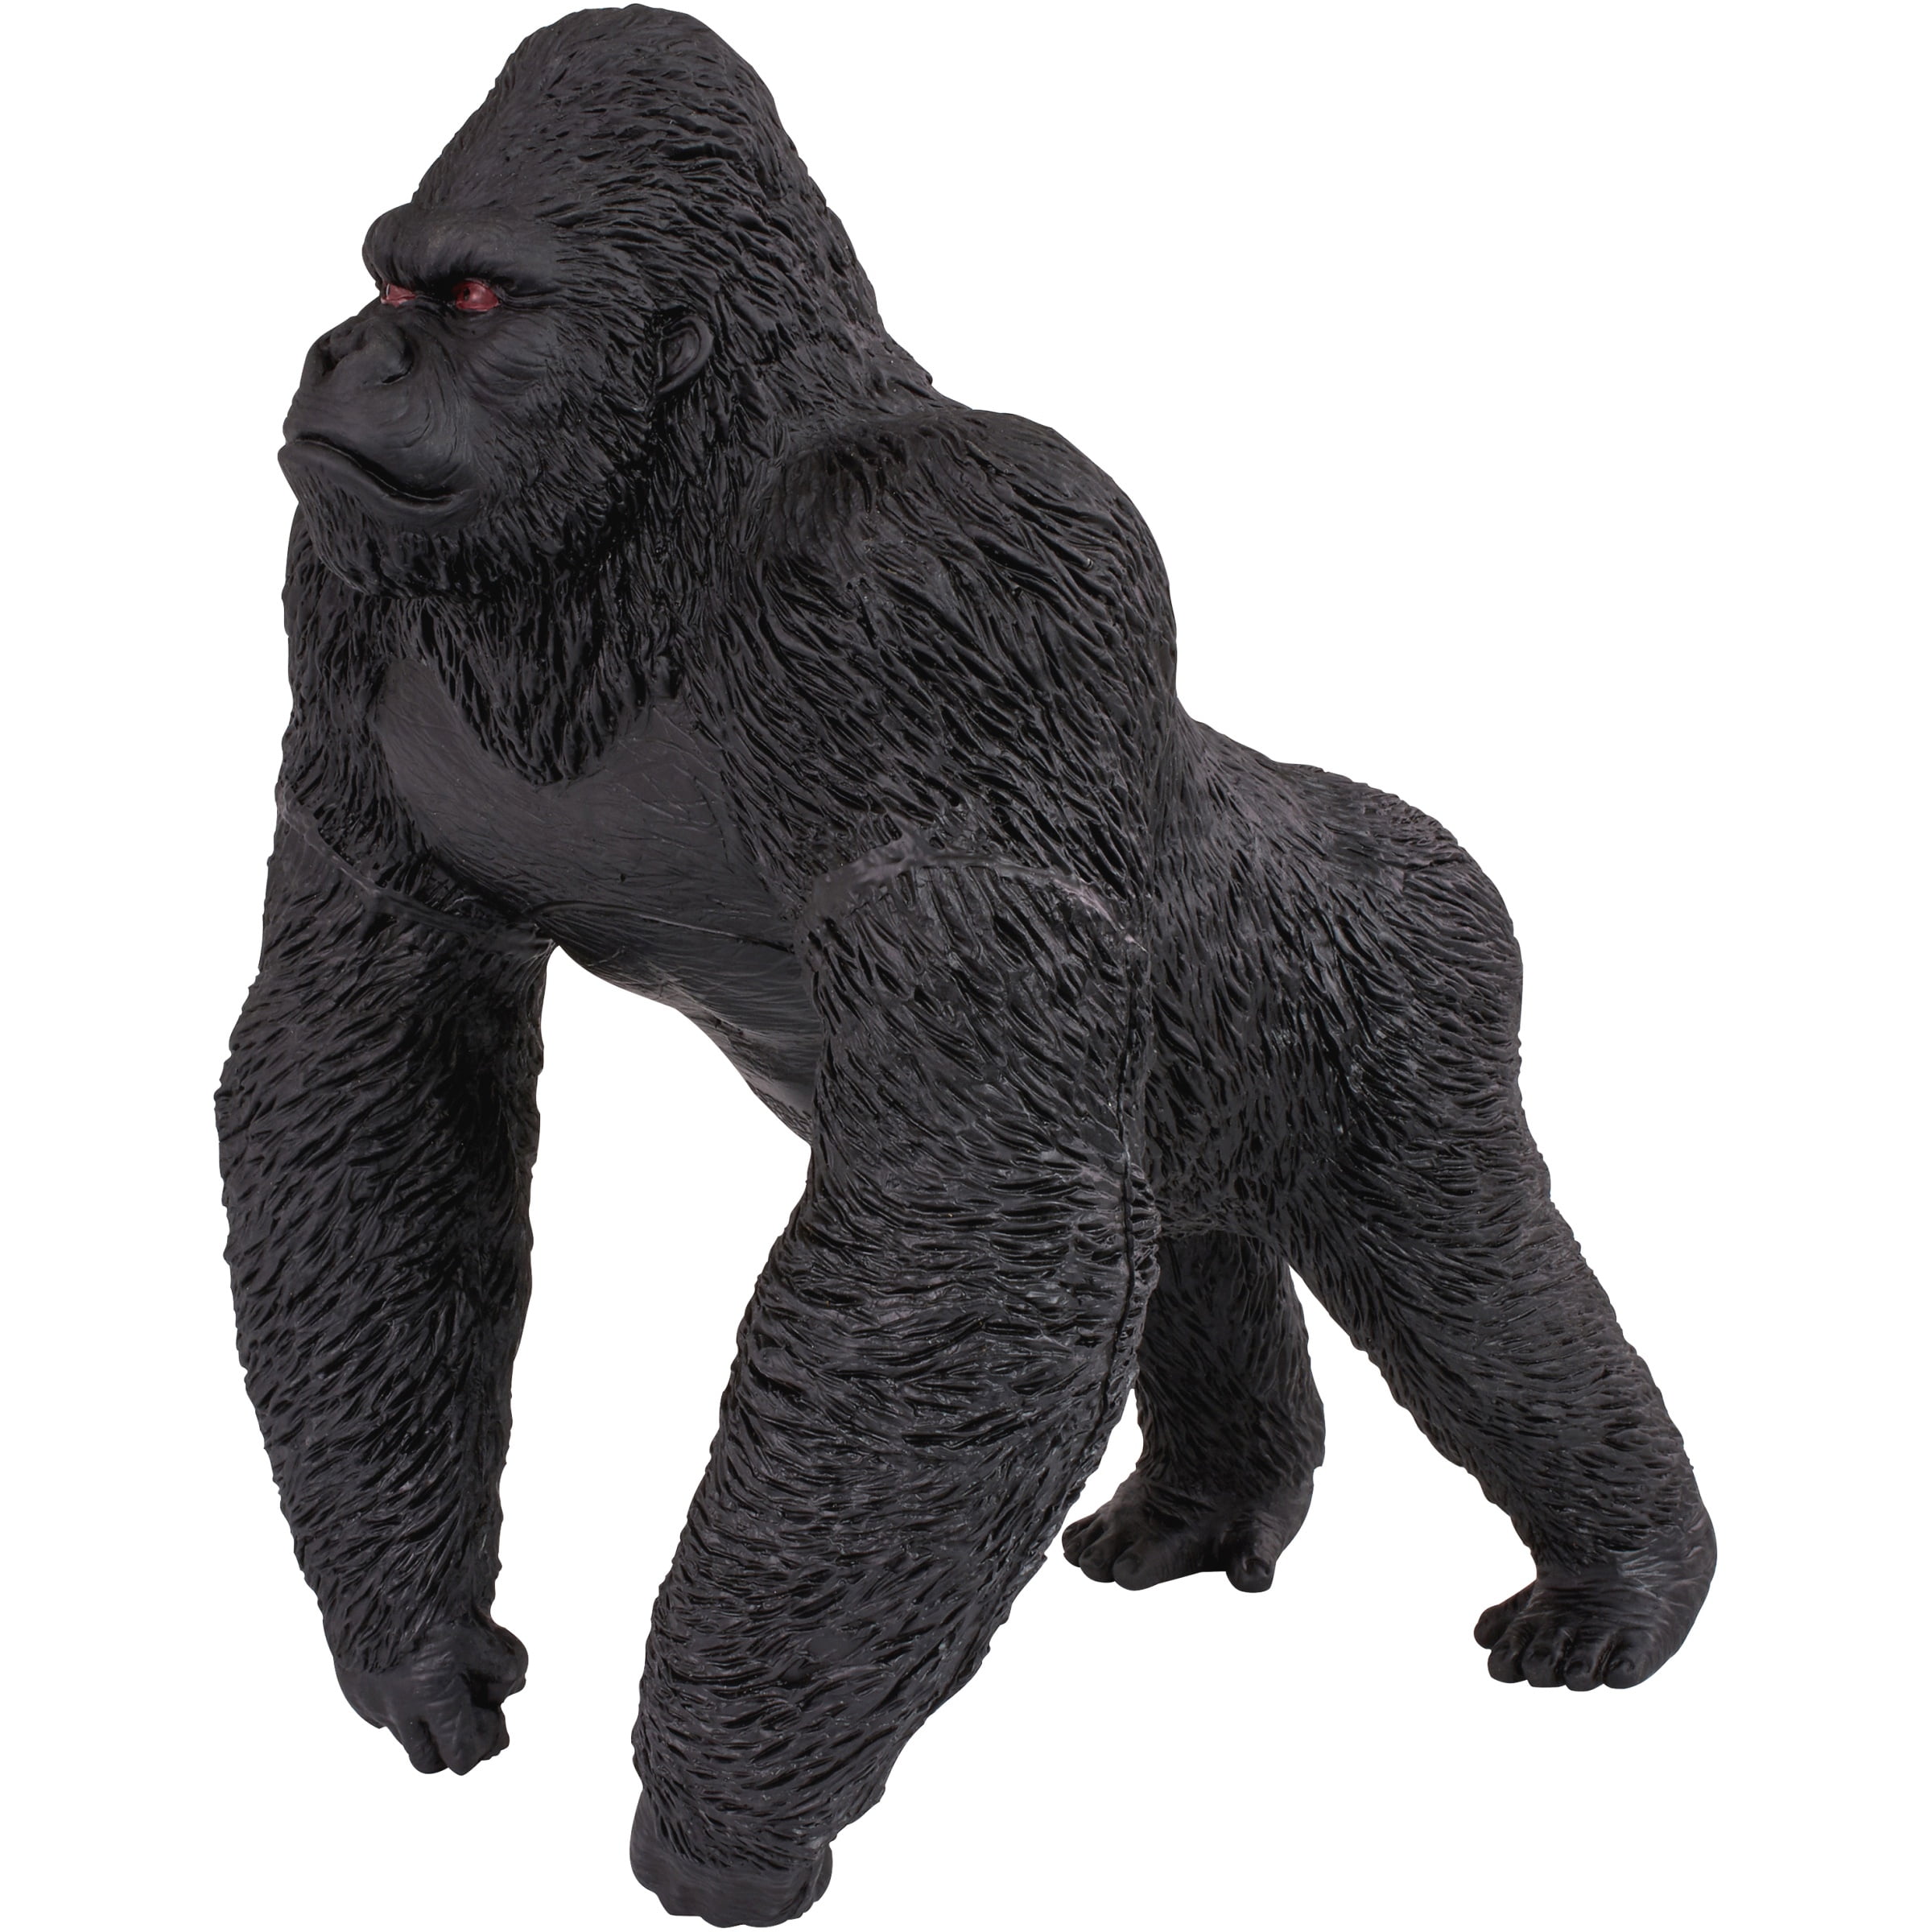 big gorilla toy